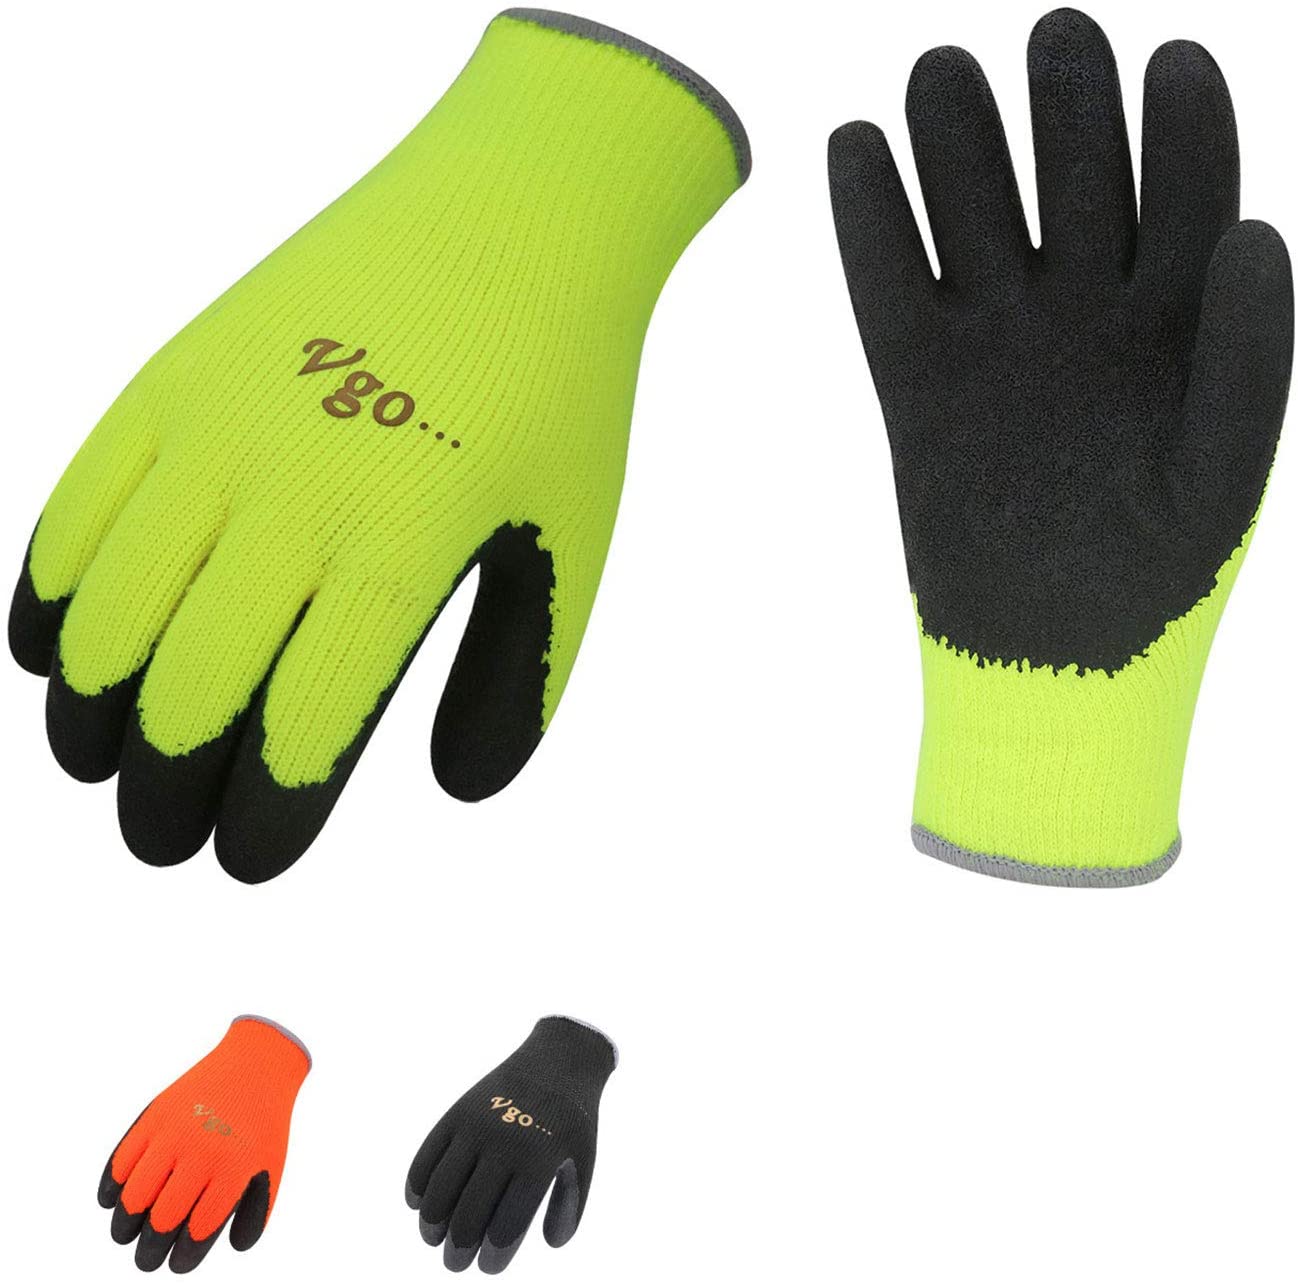 Vgo RB6010 Laminated Polyester Liner Gardening Gloves, 3-Pair